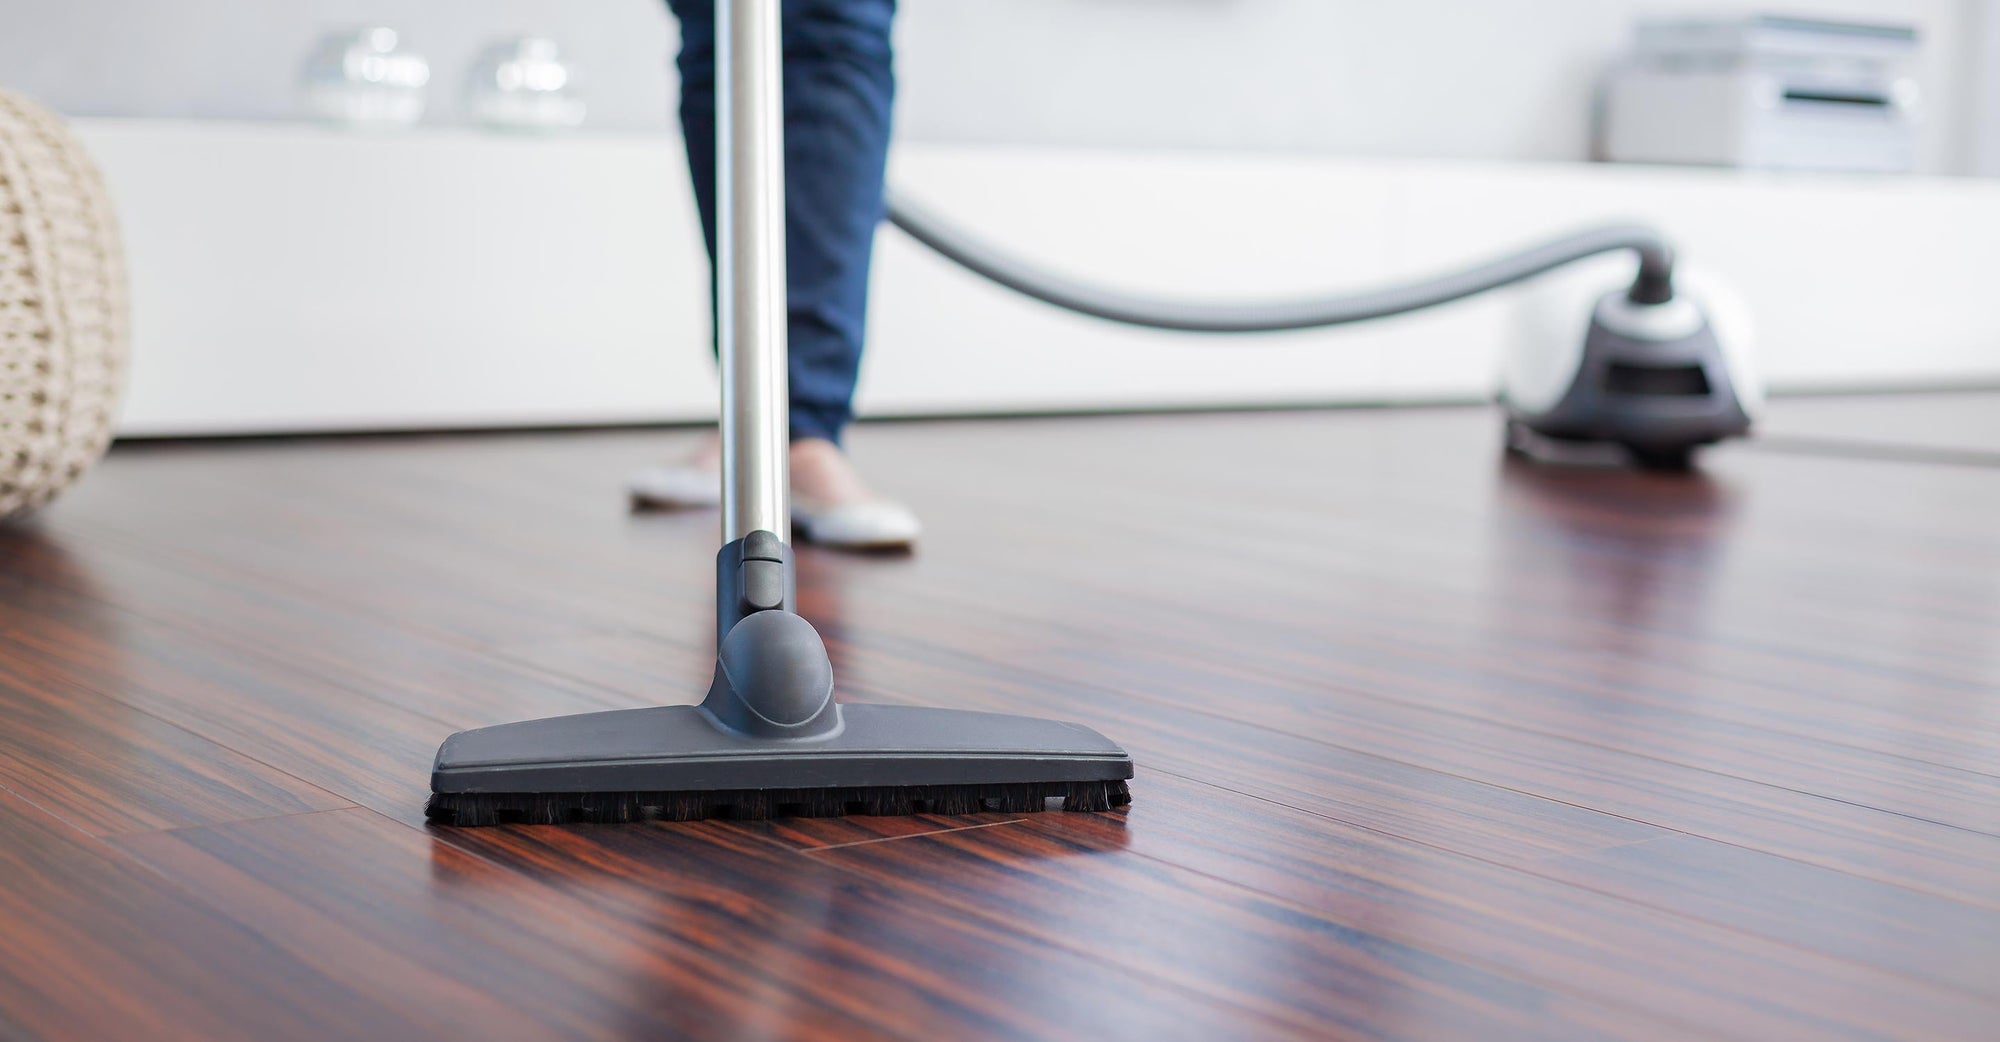 Vacuuming a wooden floor